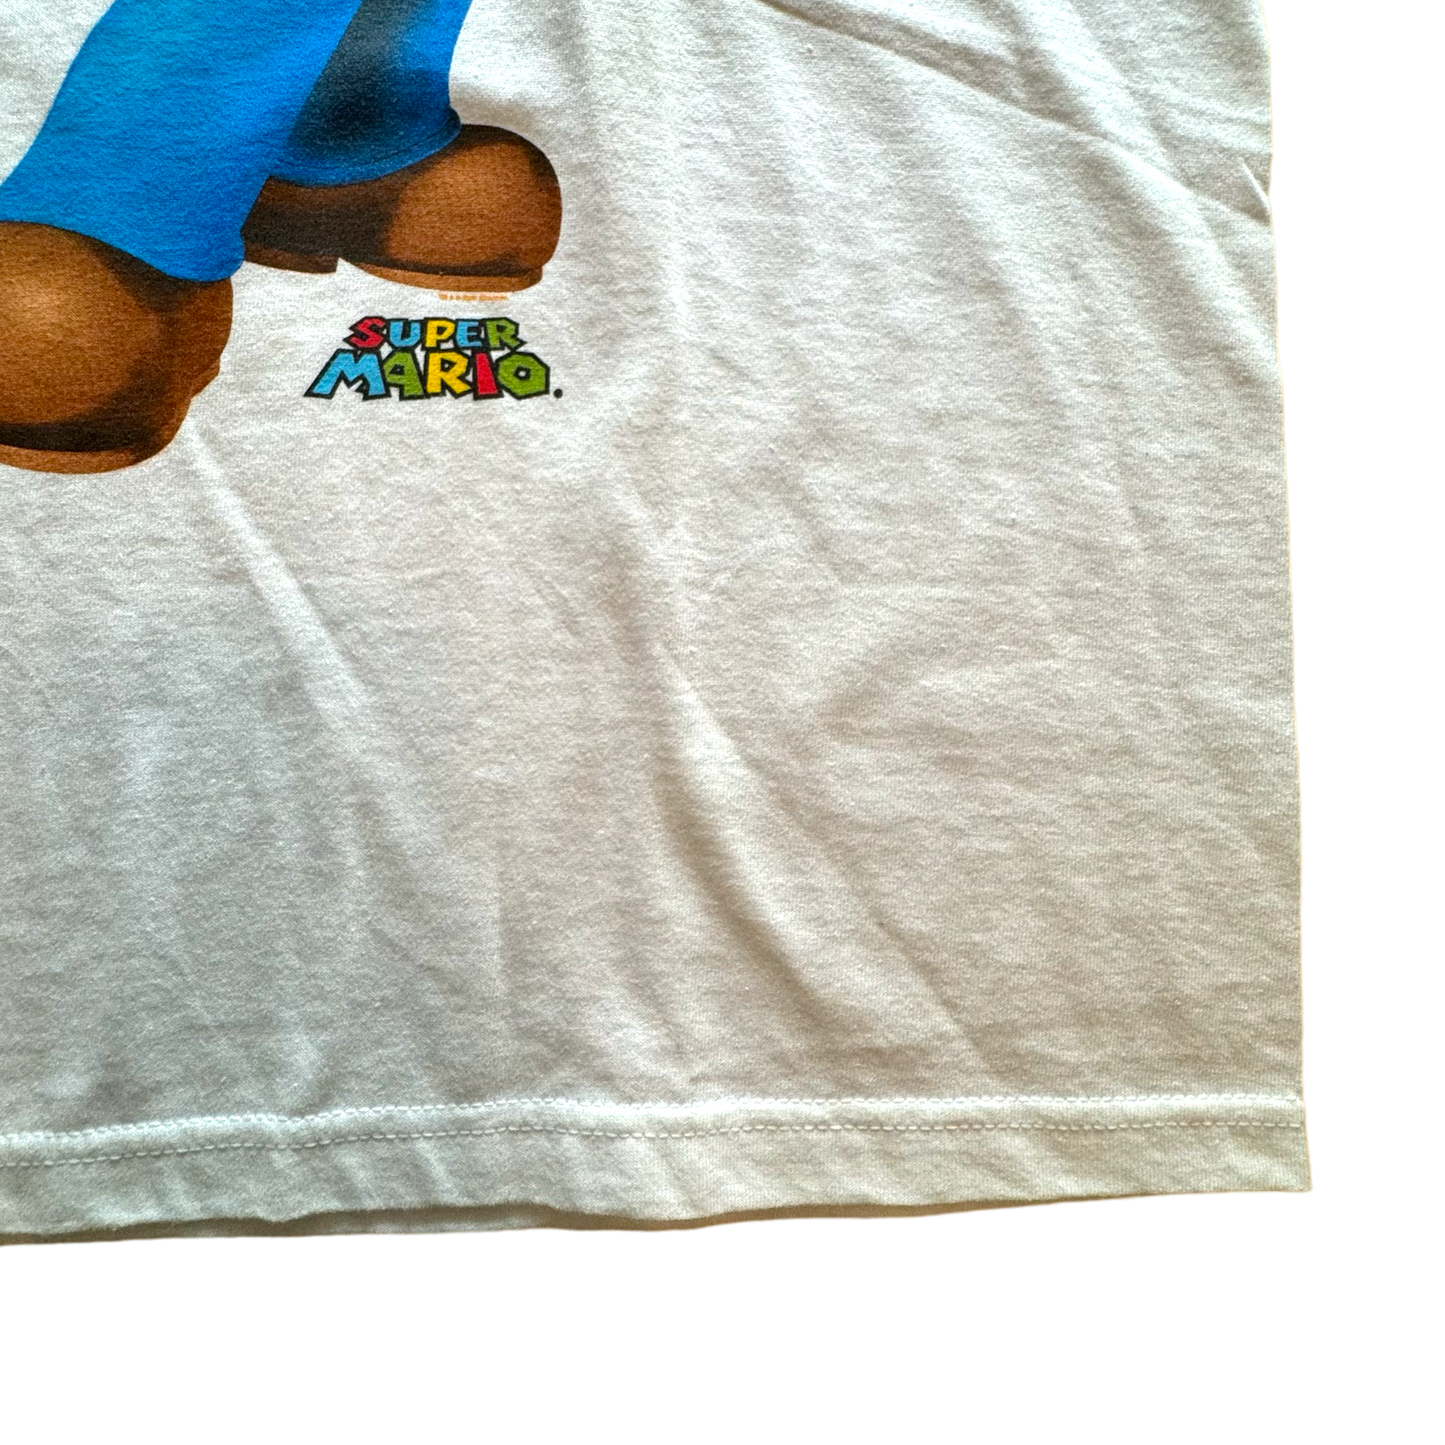 Delta x Nintendo - Super Mario White Graphic Vintage 2010 Youth T-Shirt